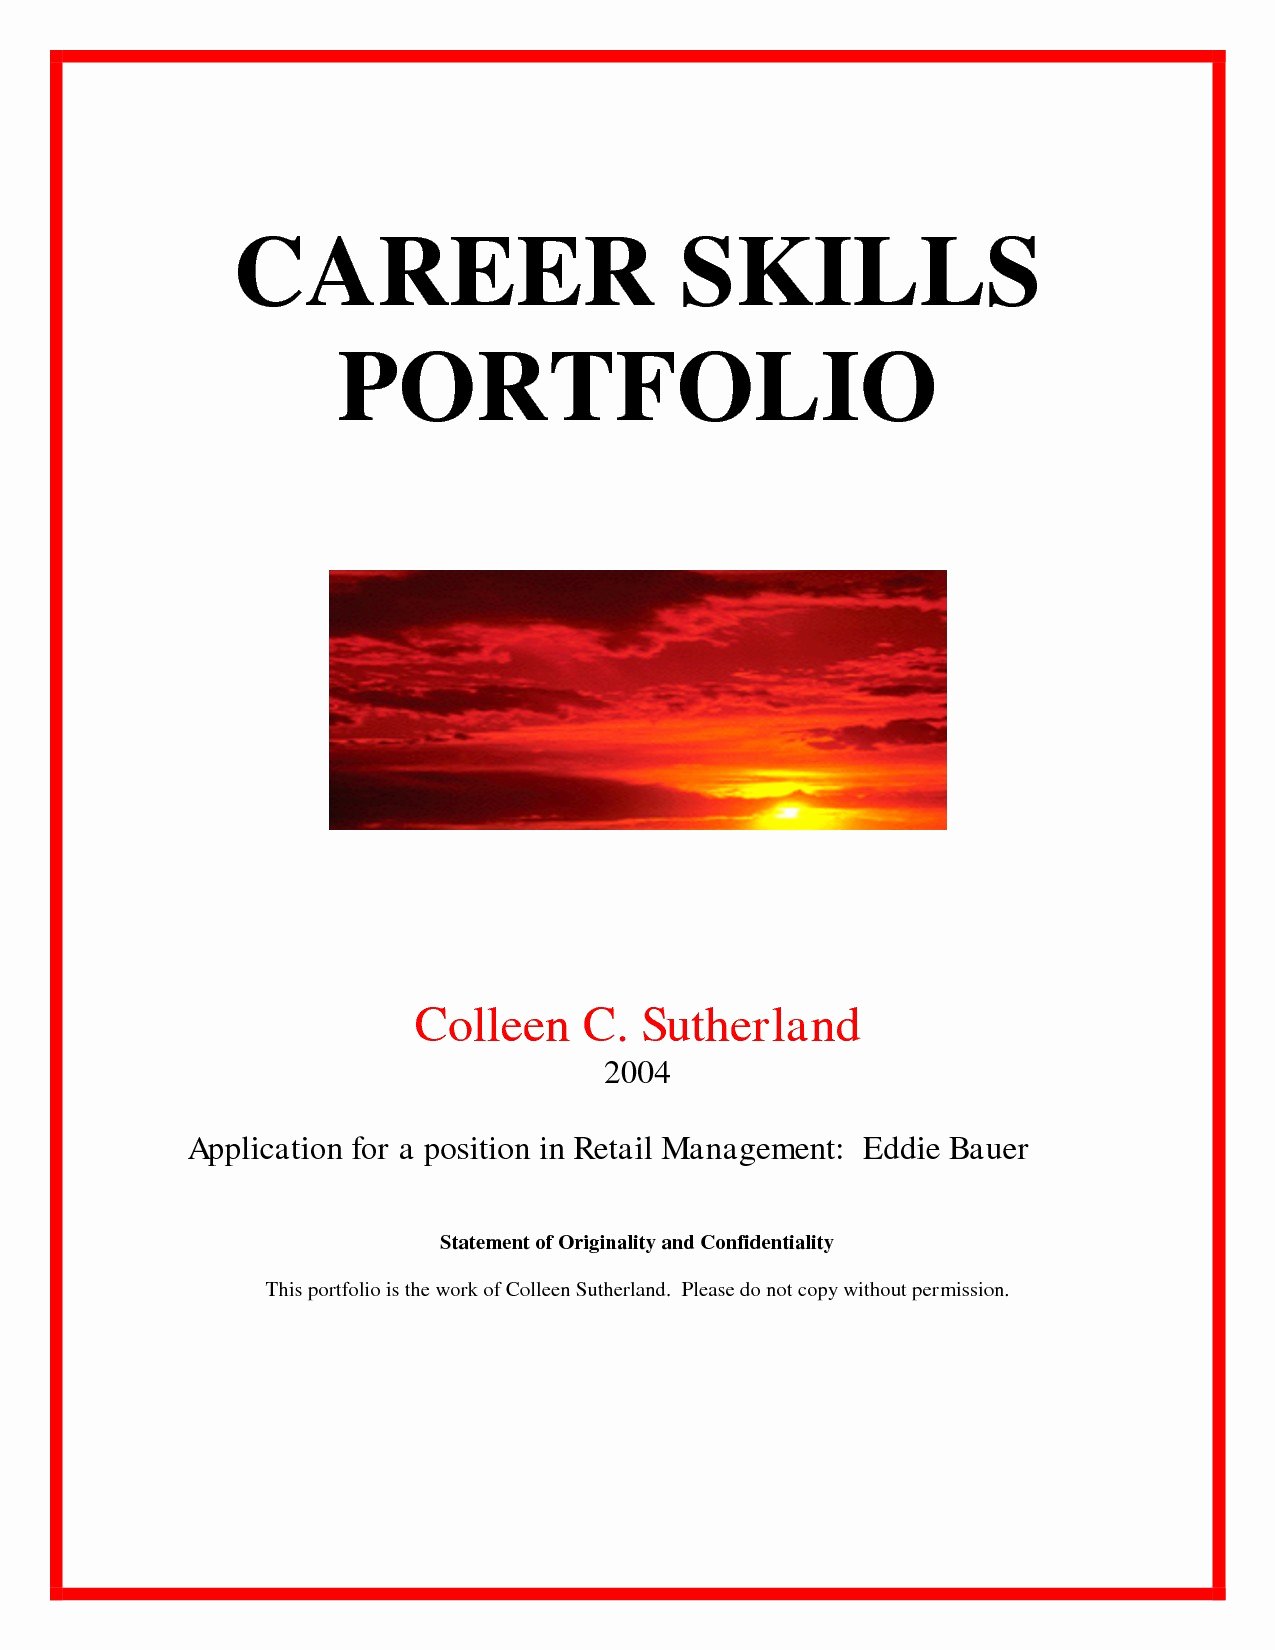 Portfolio Cover Page Example Career Portfolio Cover Page